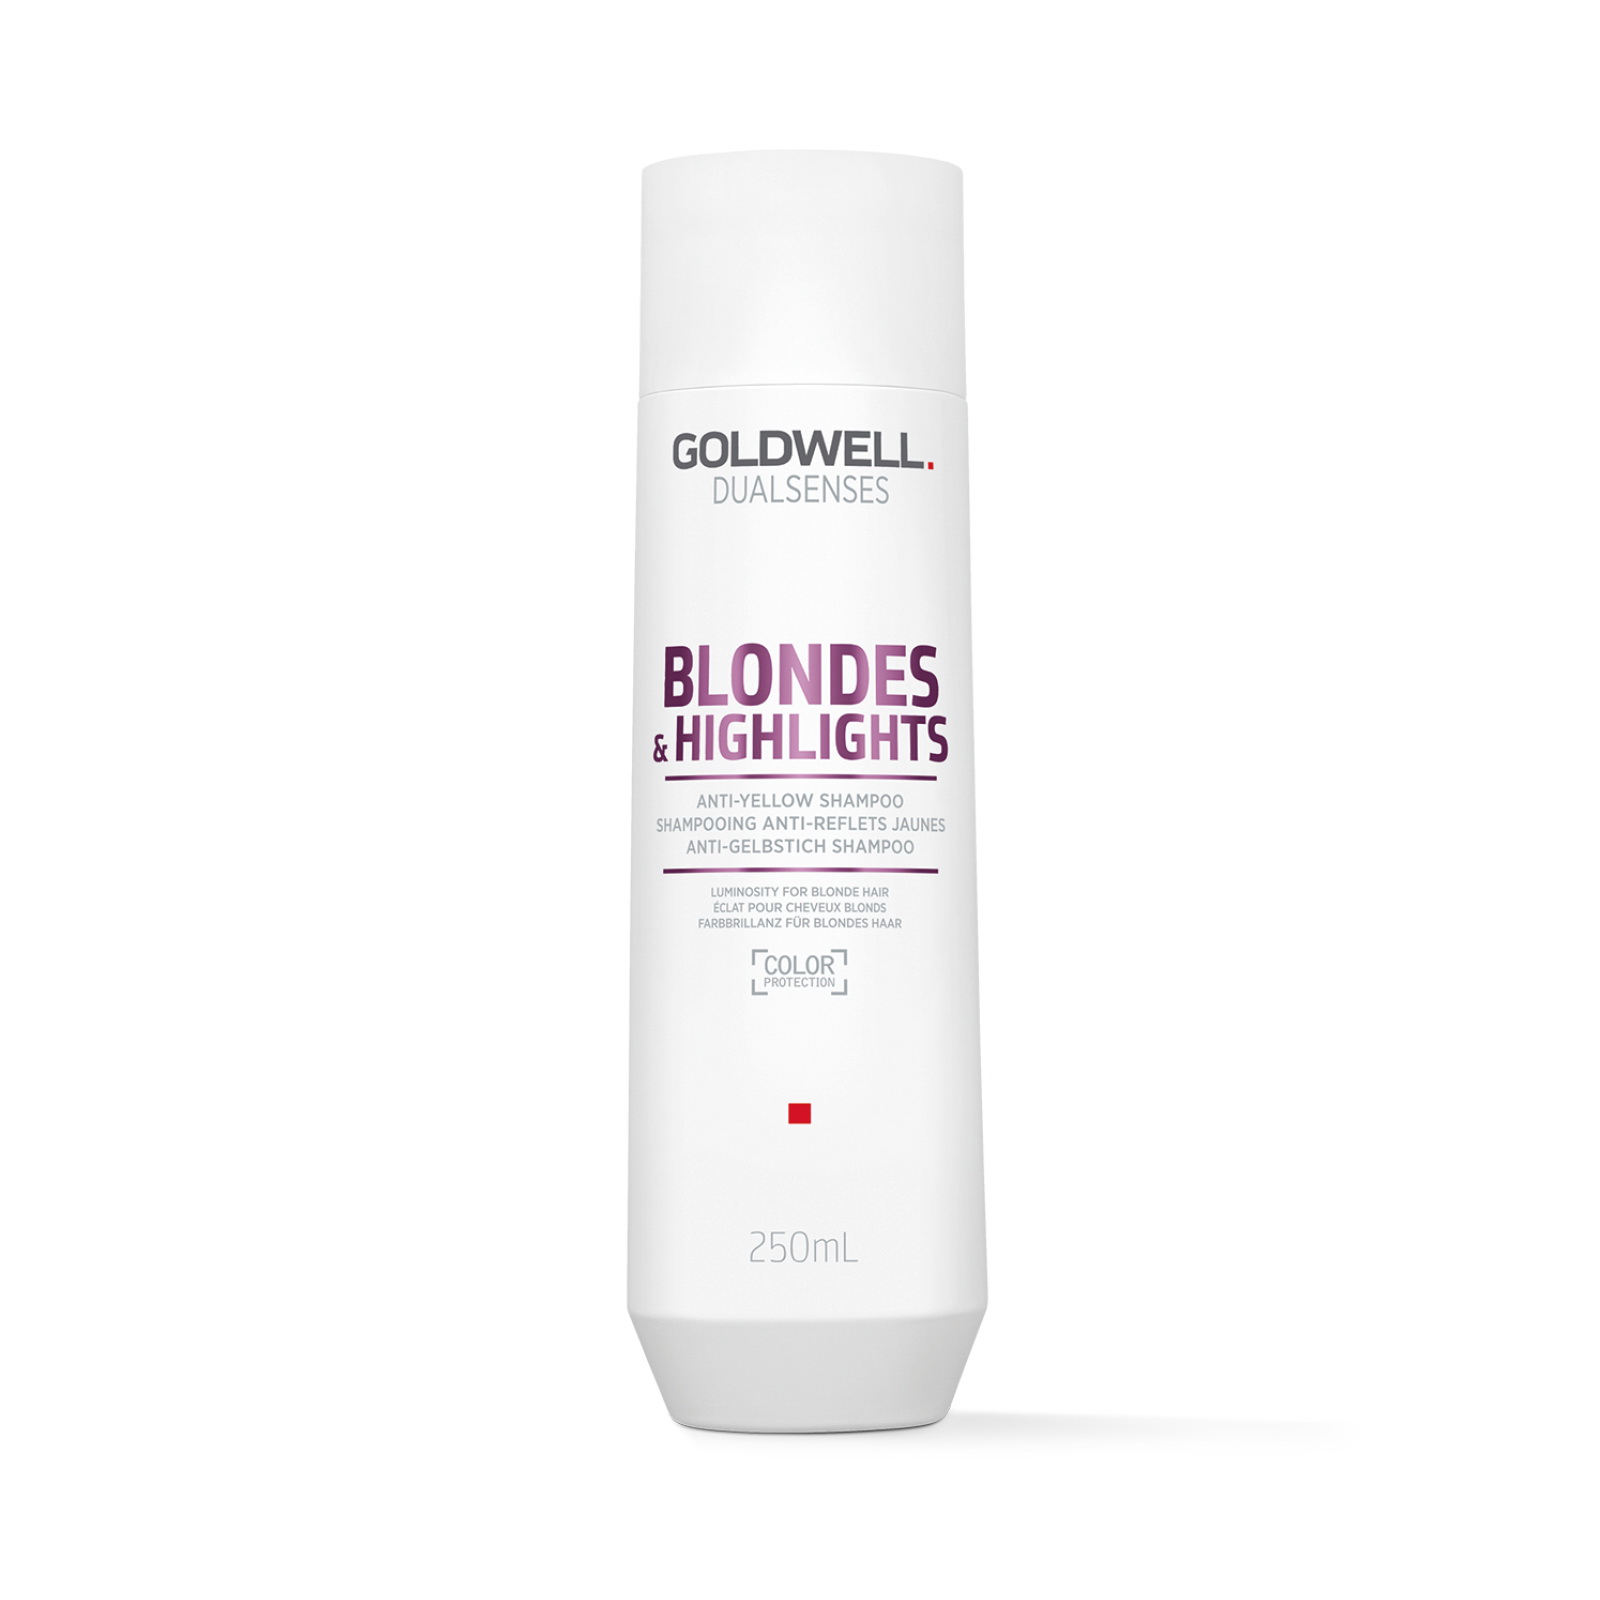 GOLDWELL Blondes&Highlights Shampoo 250ml